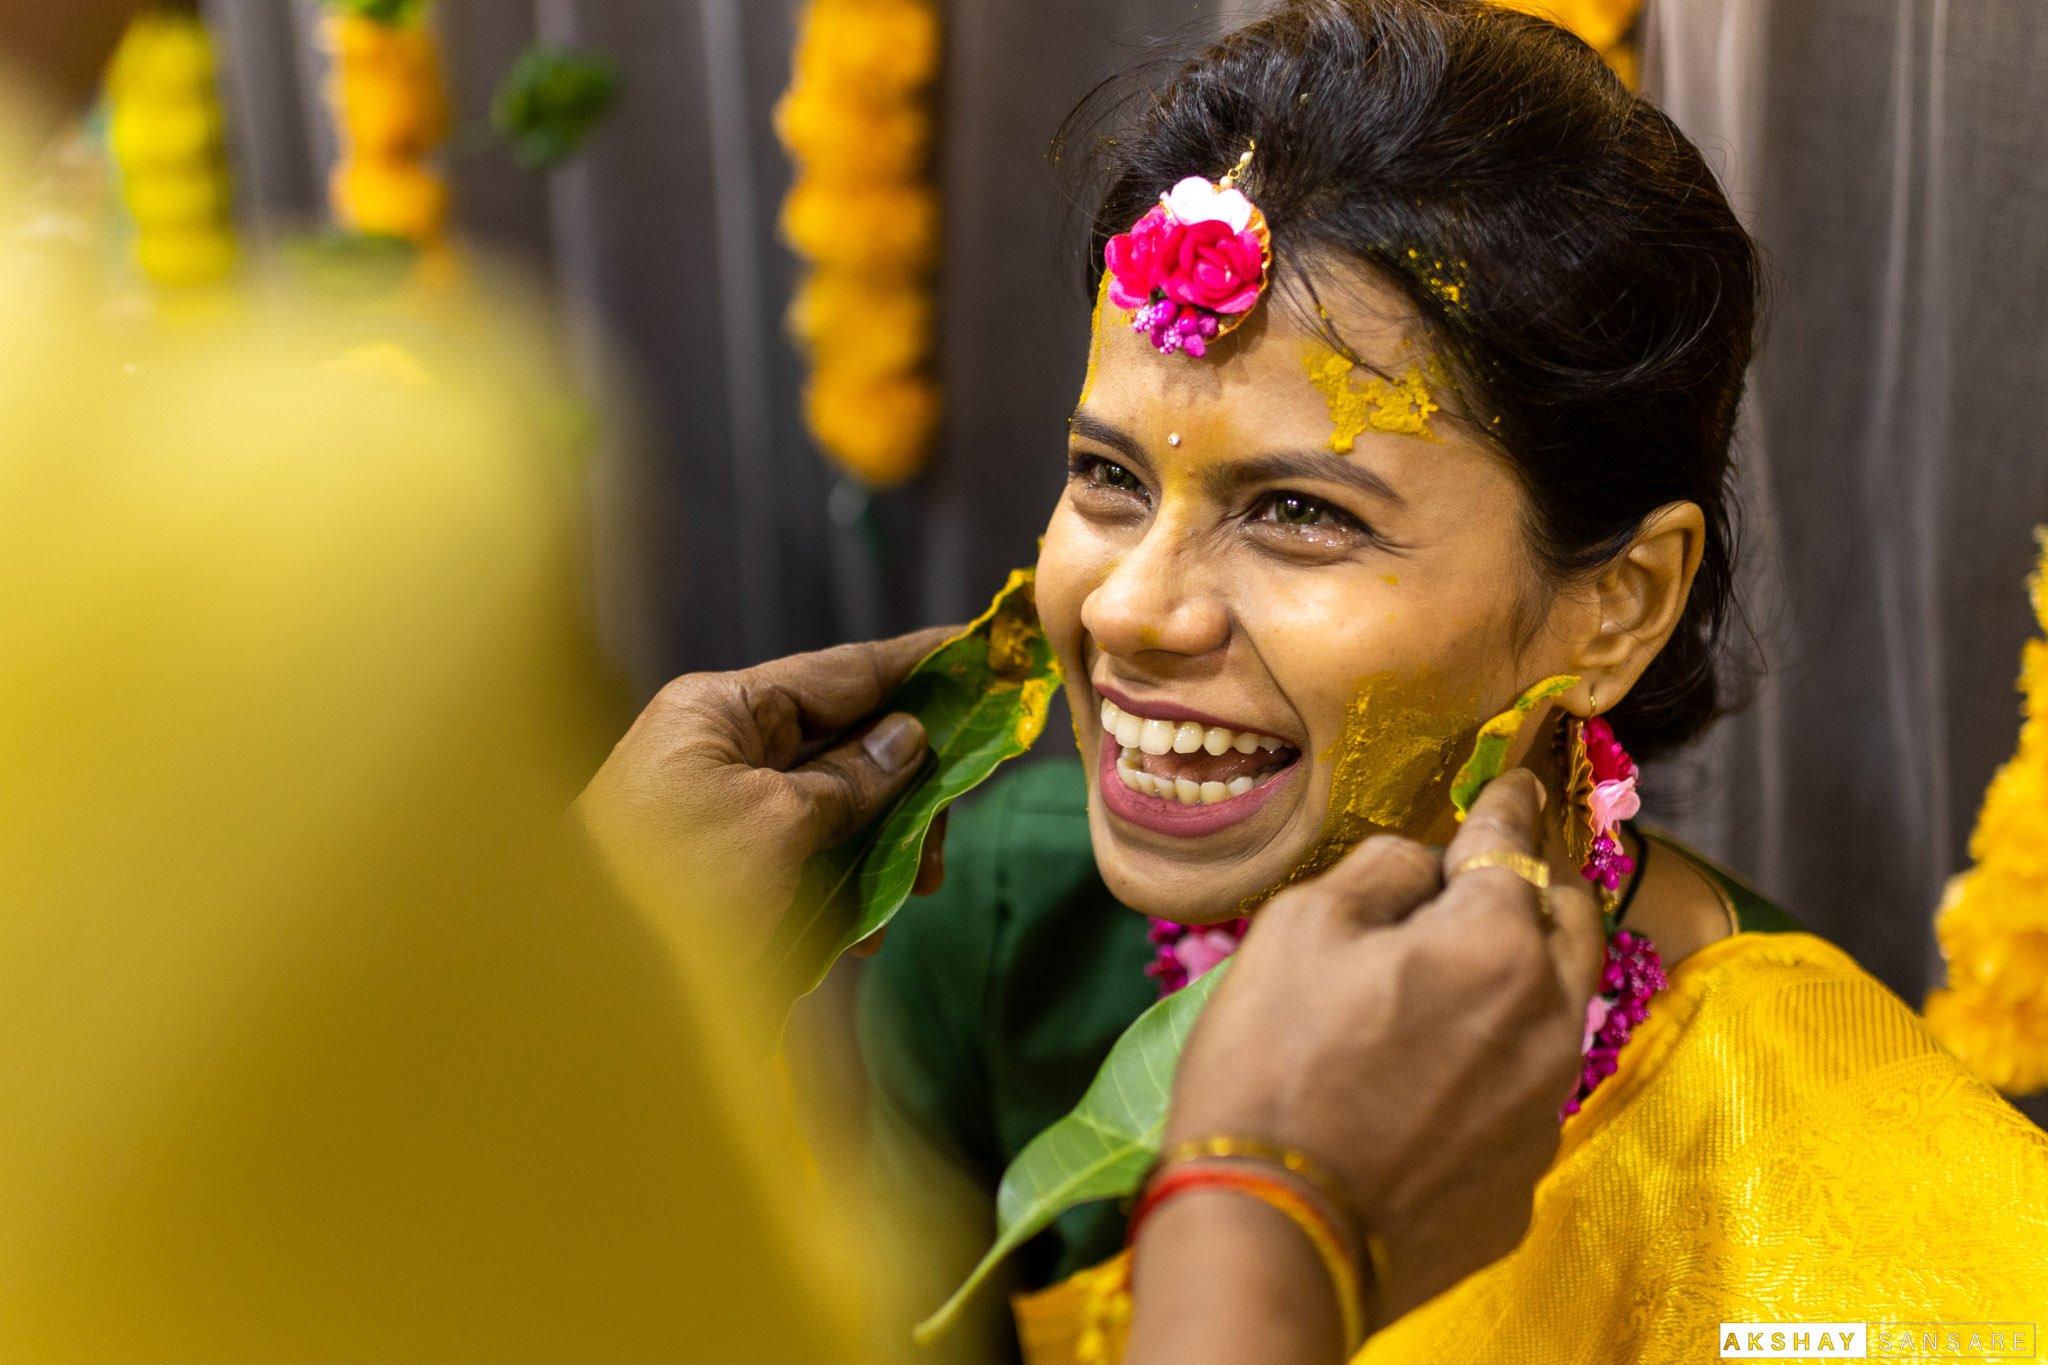 Dakshay x Basuri wedding c | Akshay Sansare Photography -16.jpg